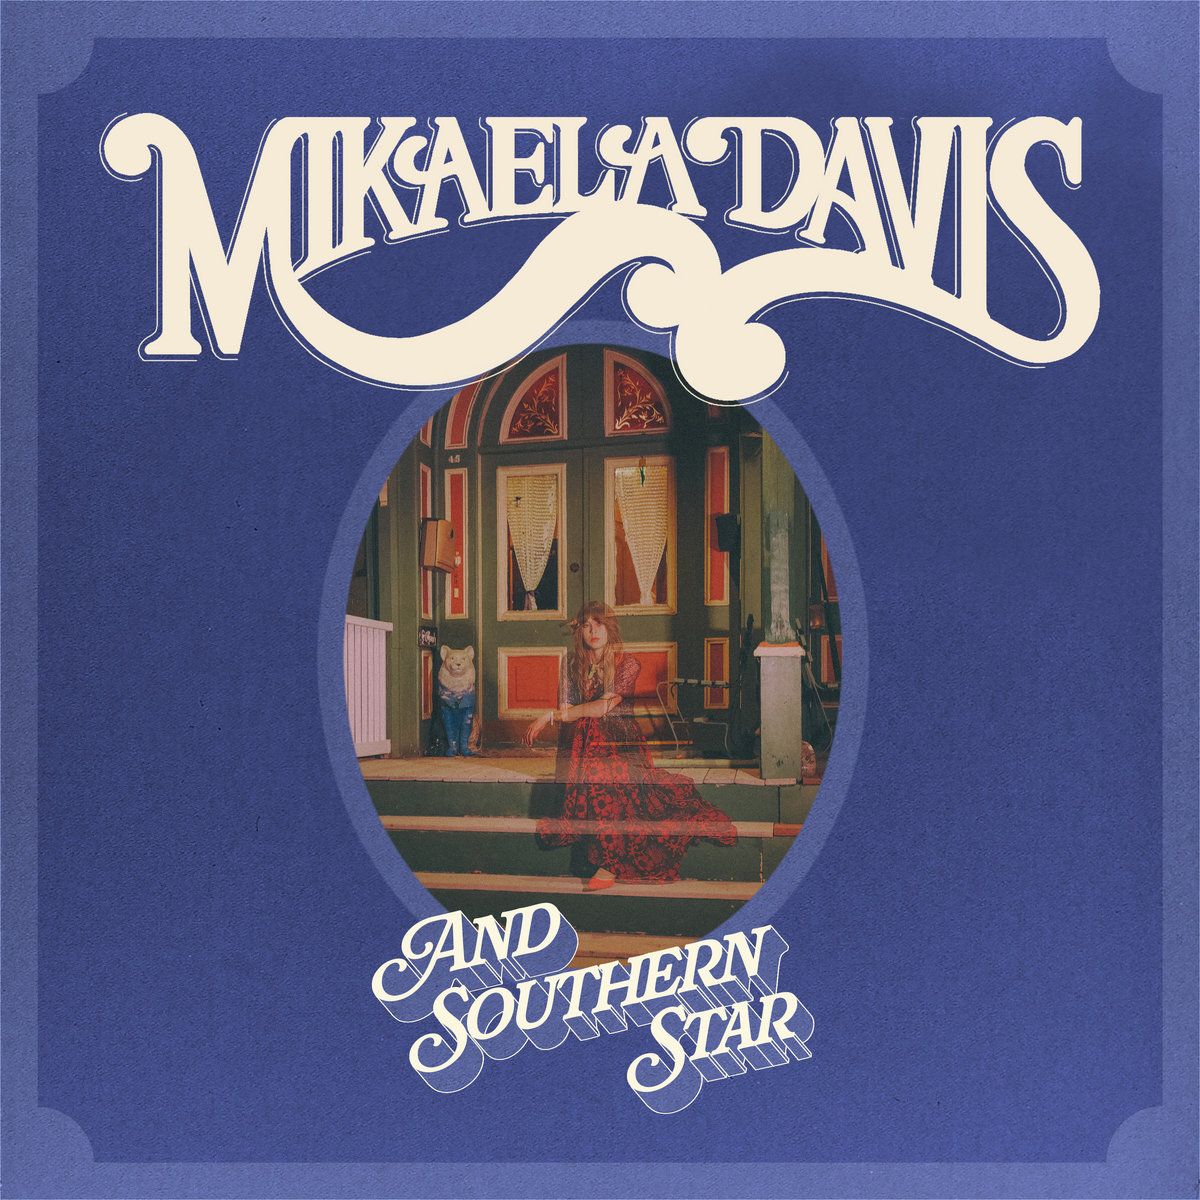 MIKAELA DAVIS / AND SOUTHERN STAR (CD)